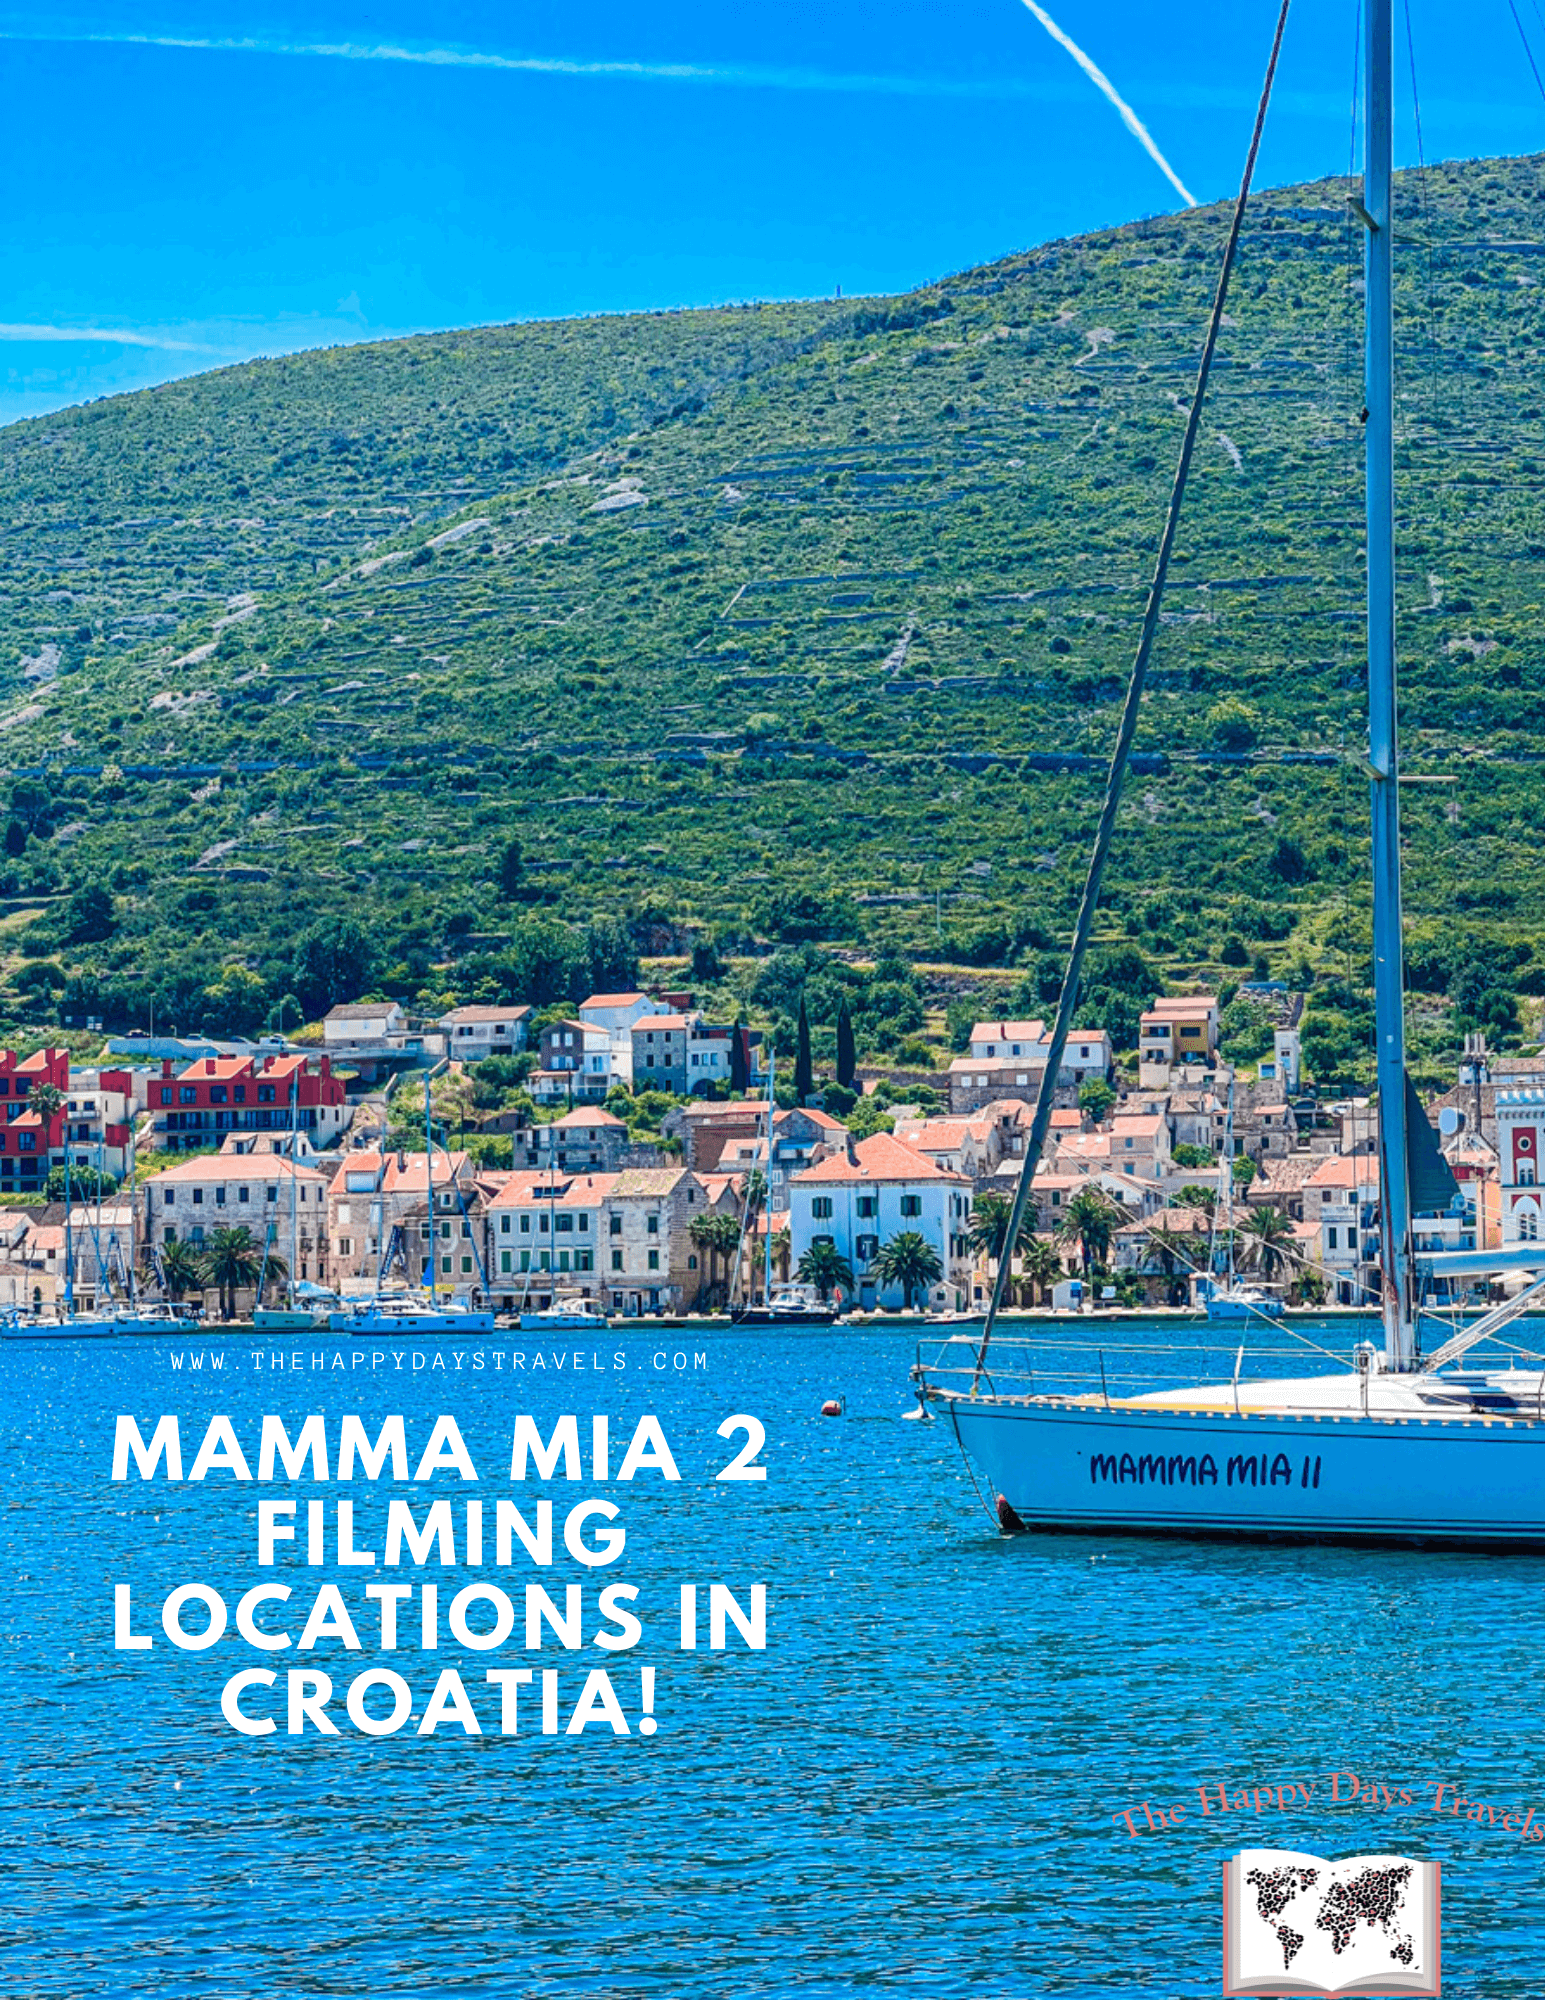 Pin image of Vis Island with Mamma Mia 2 boat. Text says 'Mamma Mia 2 Filming Locations in Croatia'